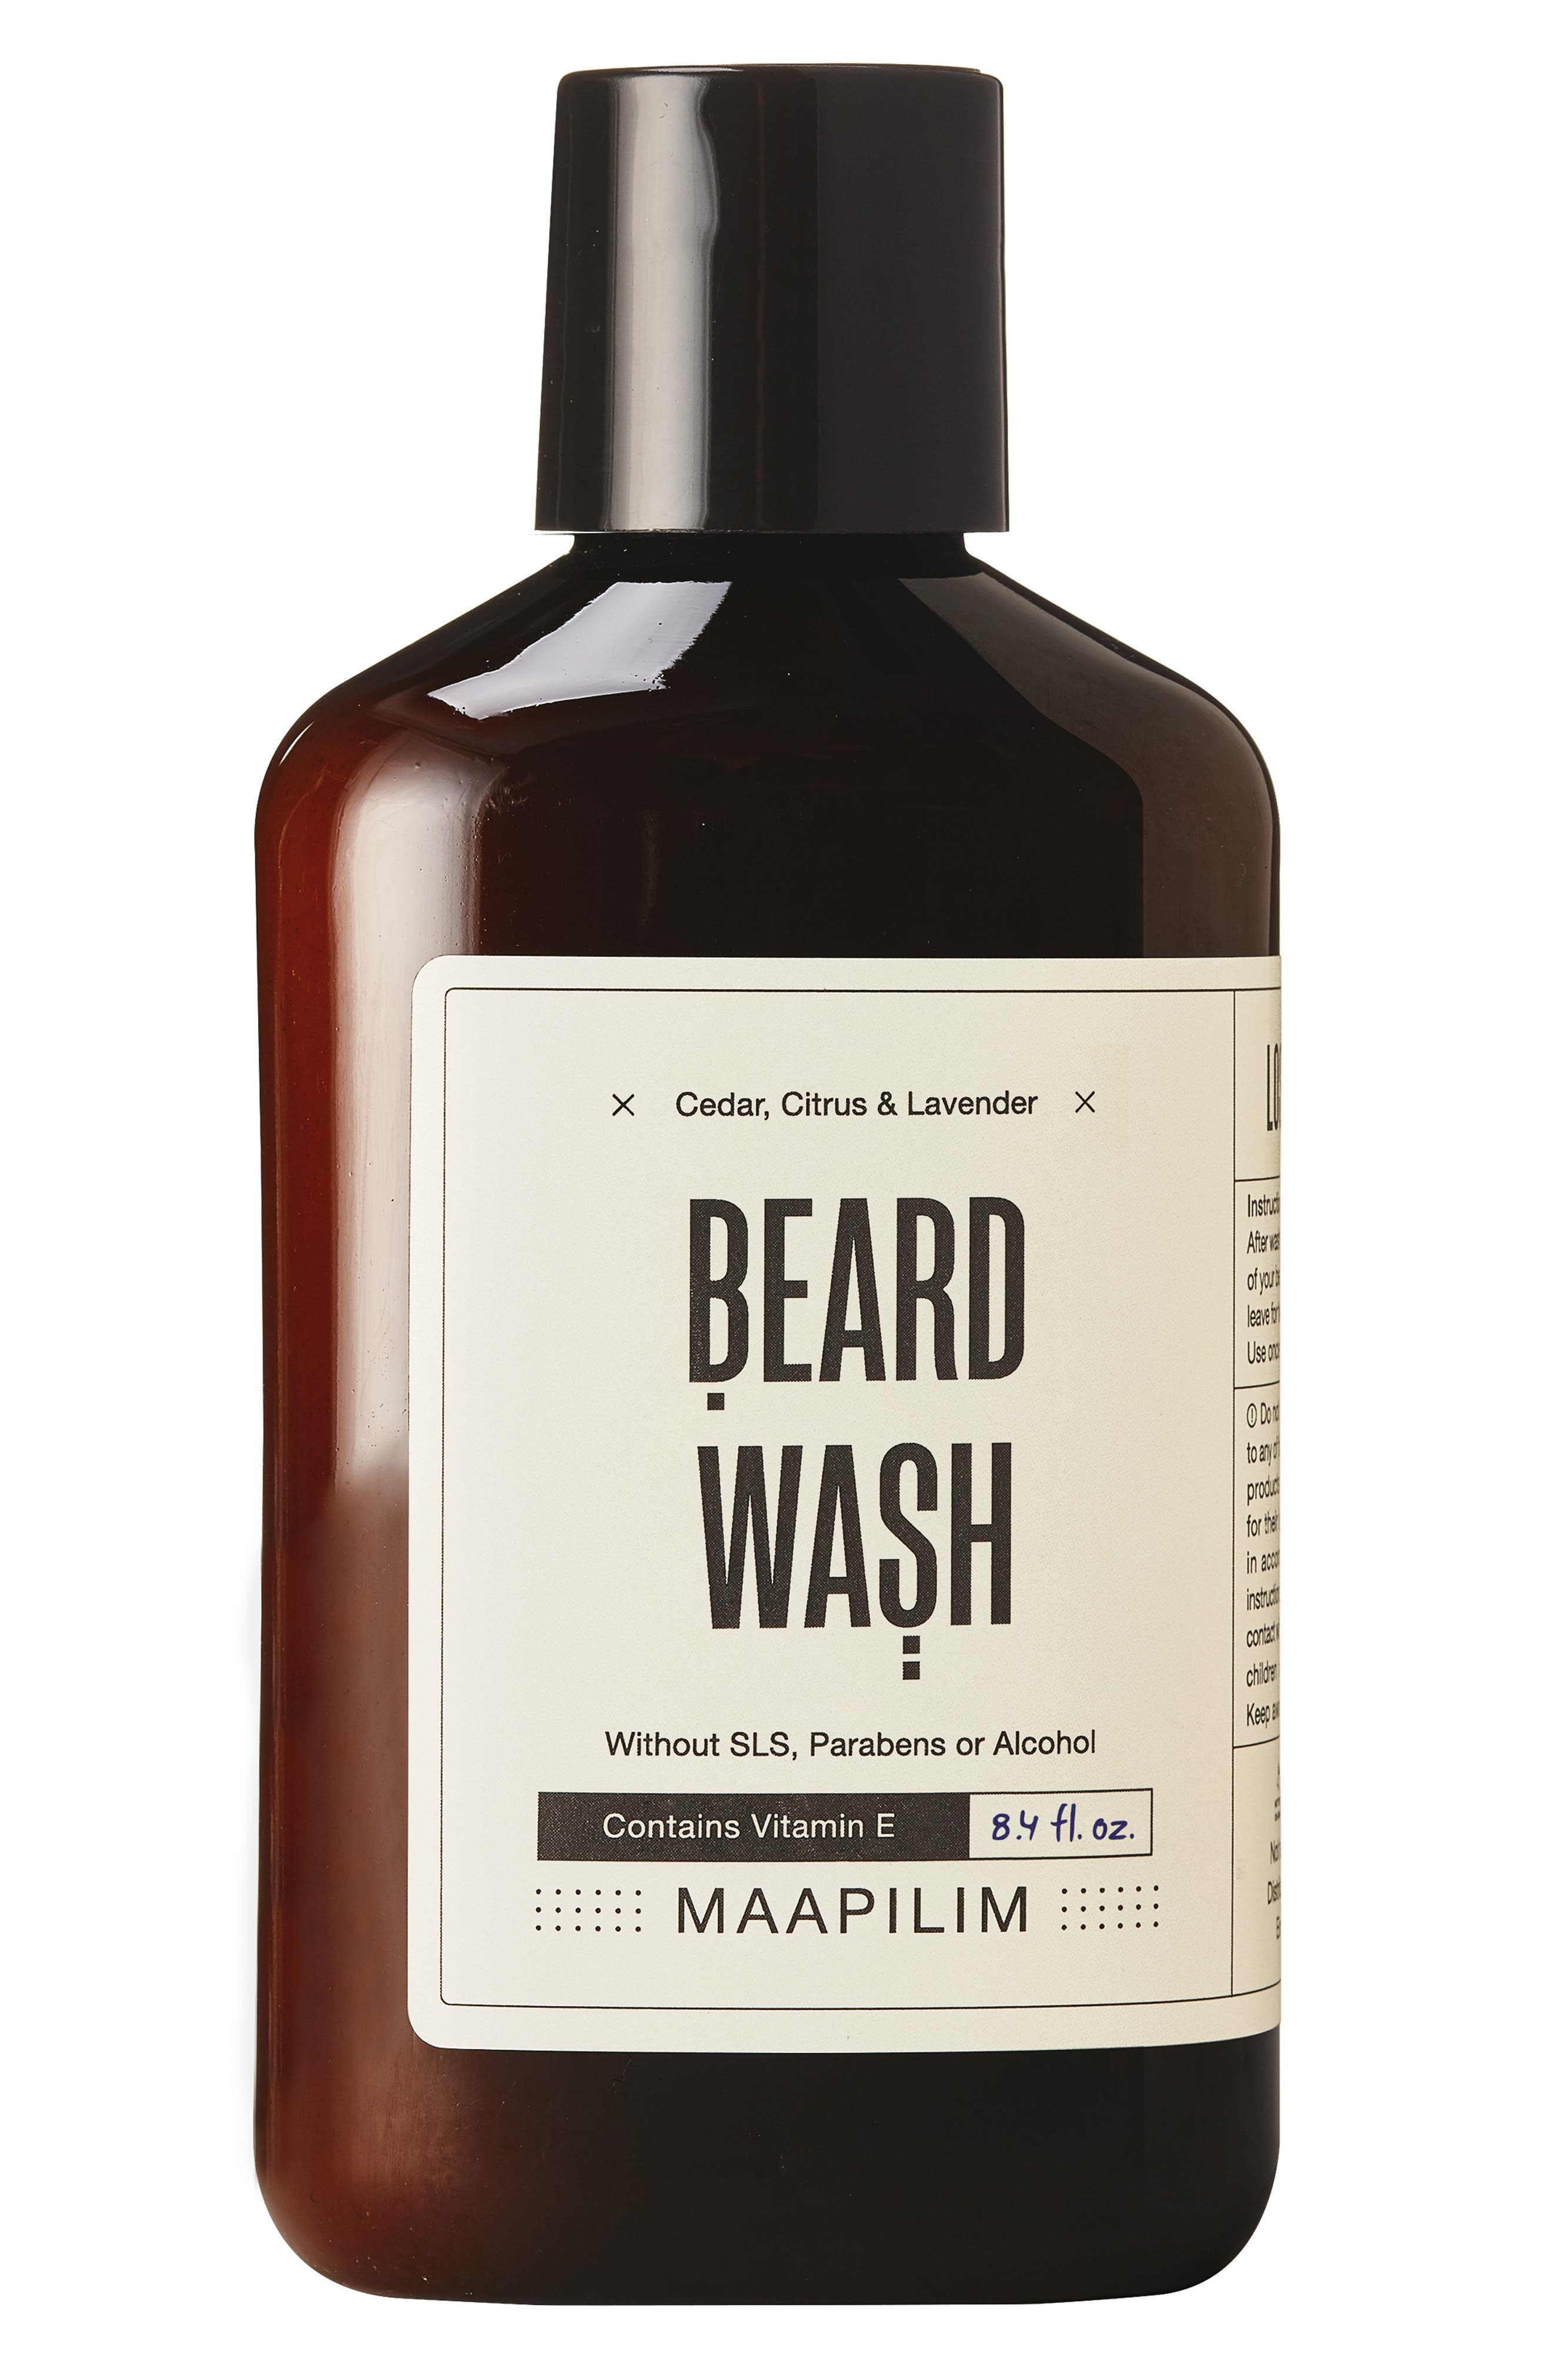 MAAPILIM Beard Wash at Nordstrom